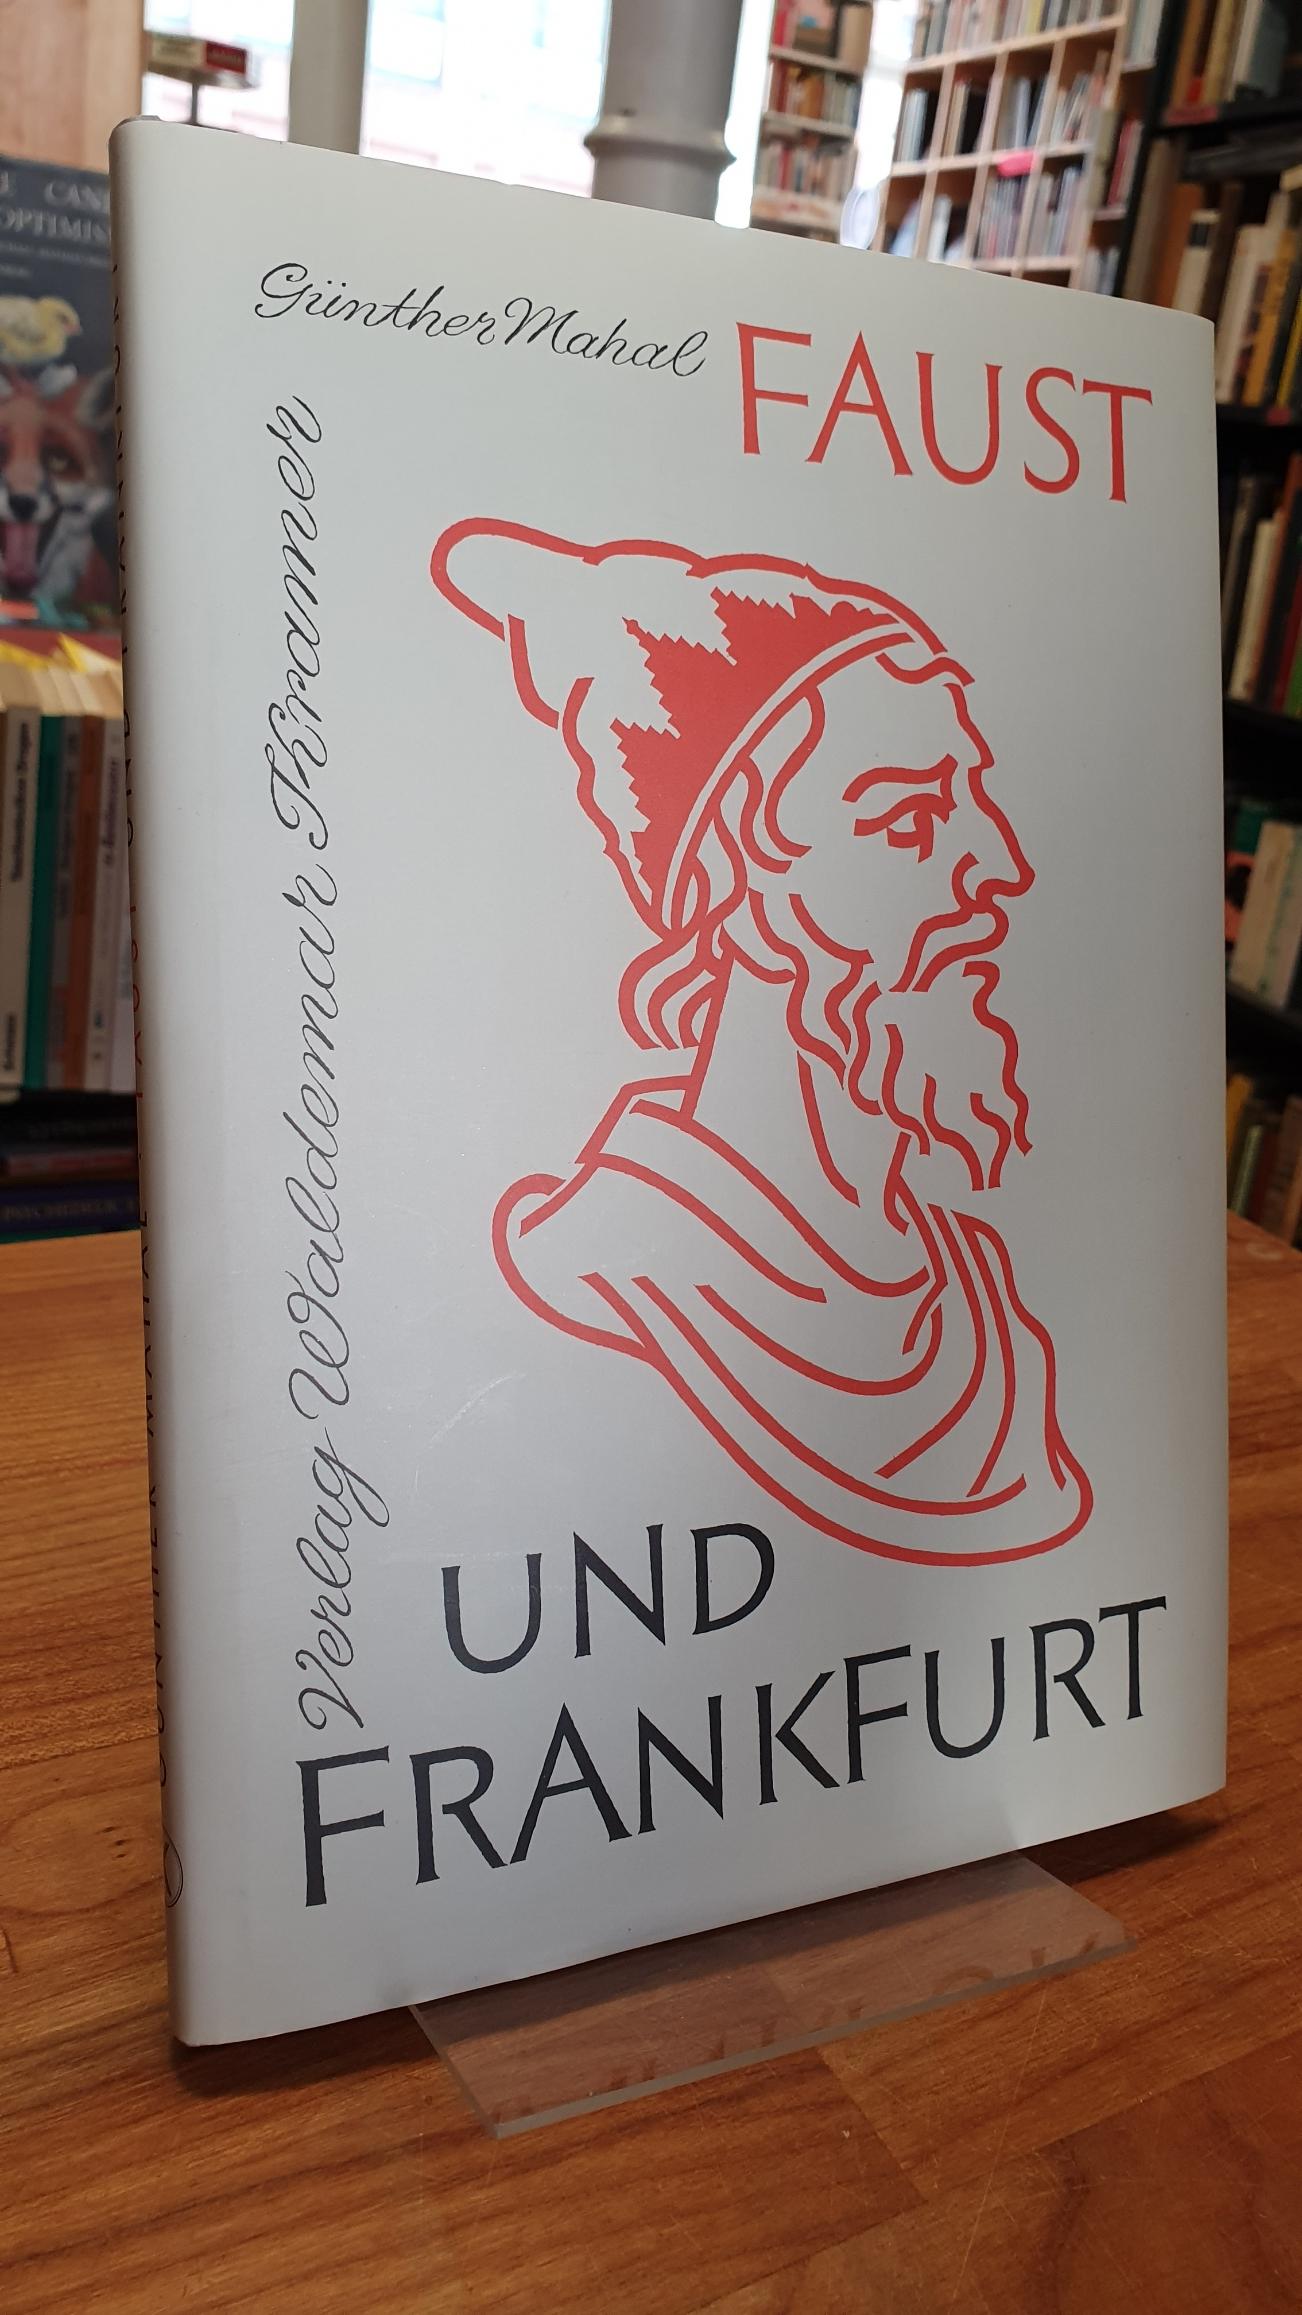 Mahal, Faust und Frankfurt – Anstösse, Reaktionen, Verknüpfungen, Reibungen,